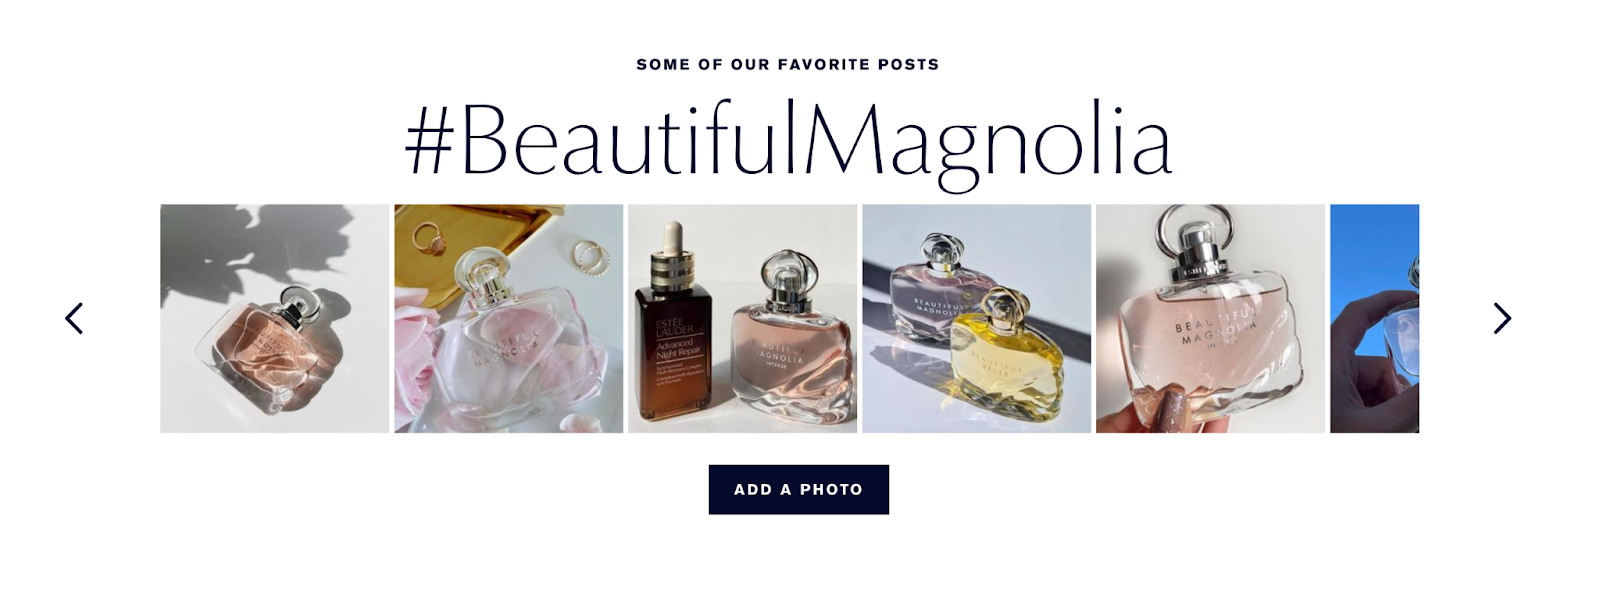 Estee Lauder Beautiful Fragrances: Zero-Party Data Collection